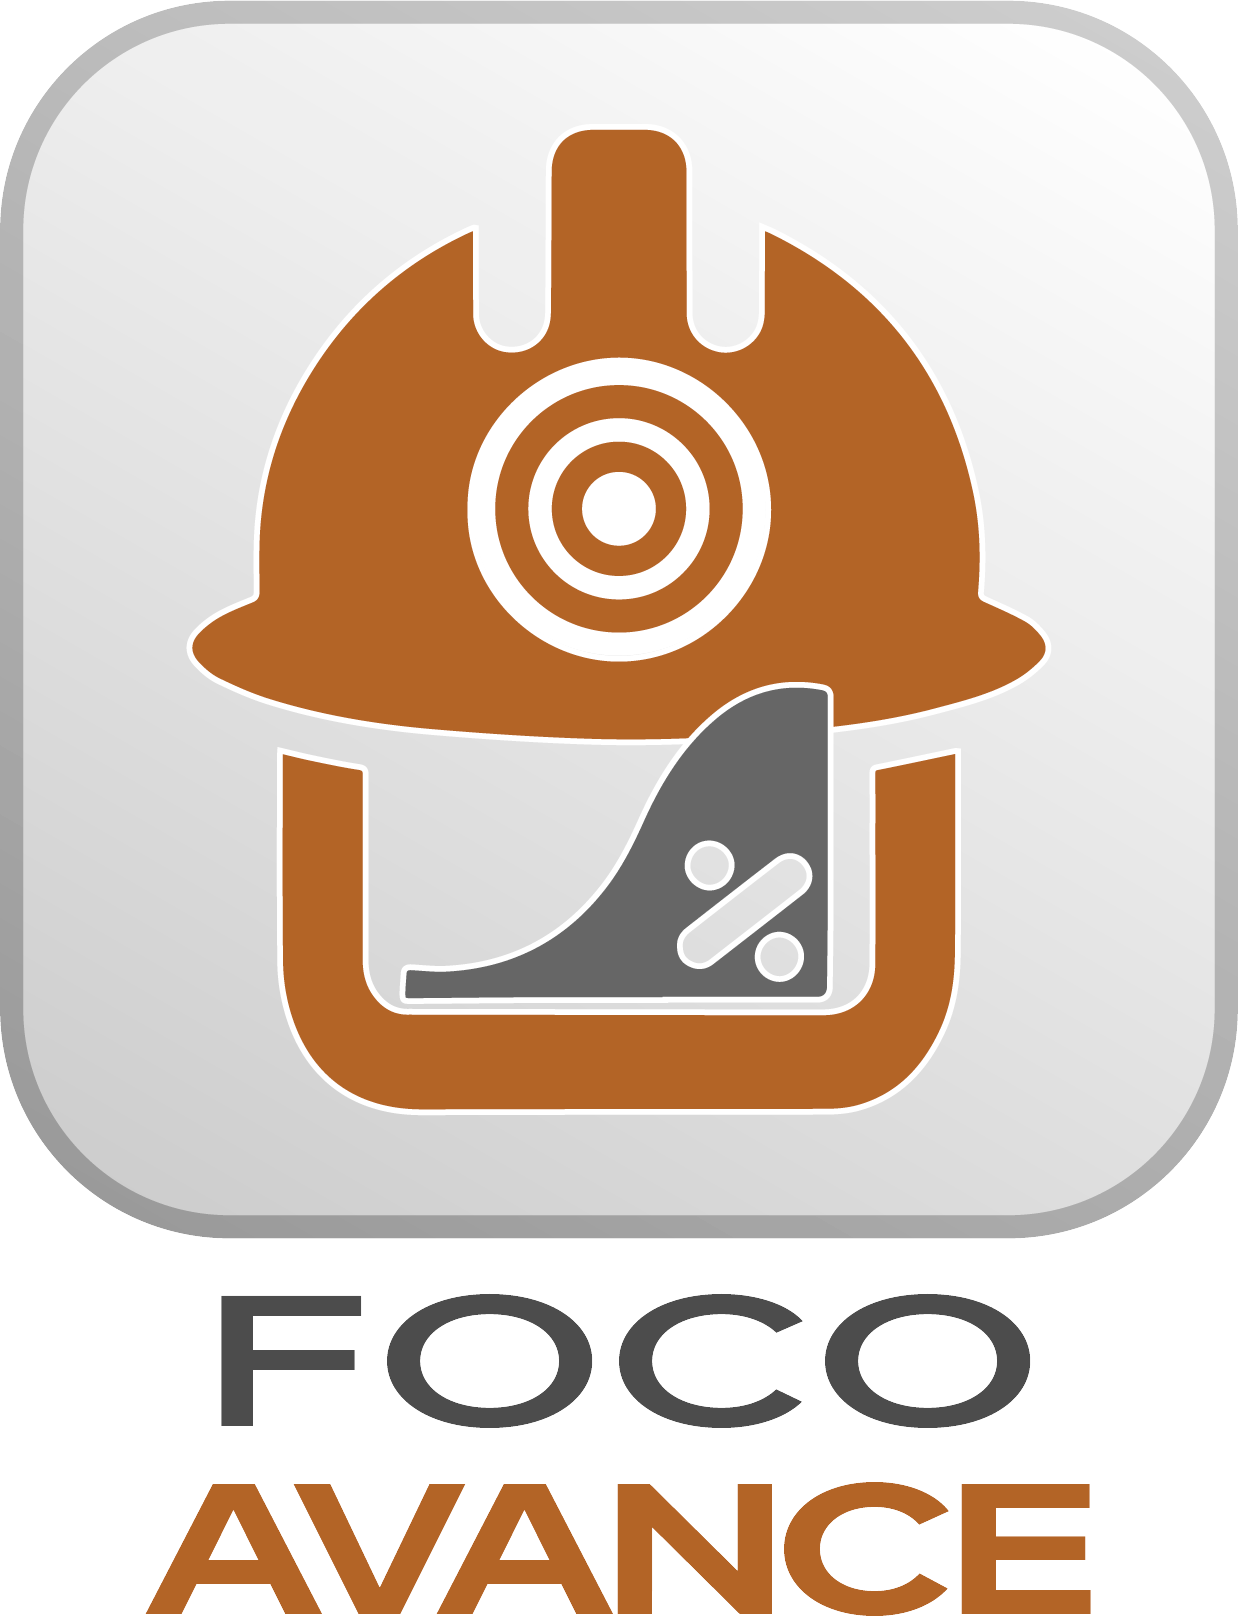 Foco Avance logo